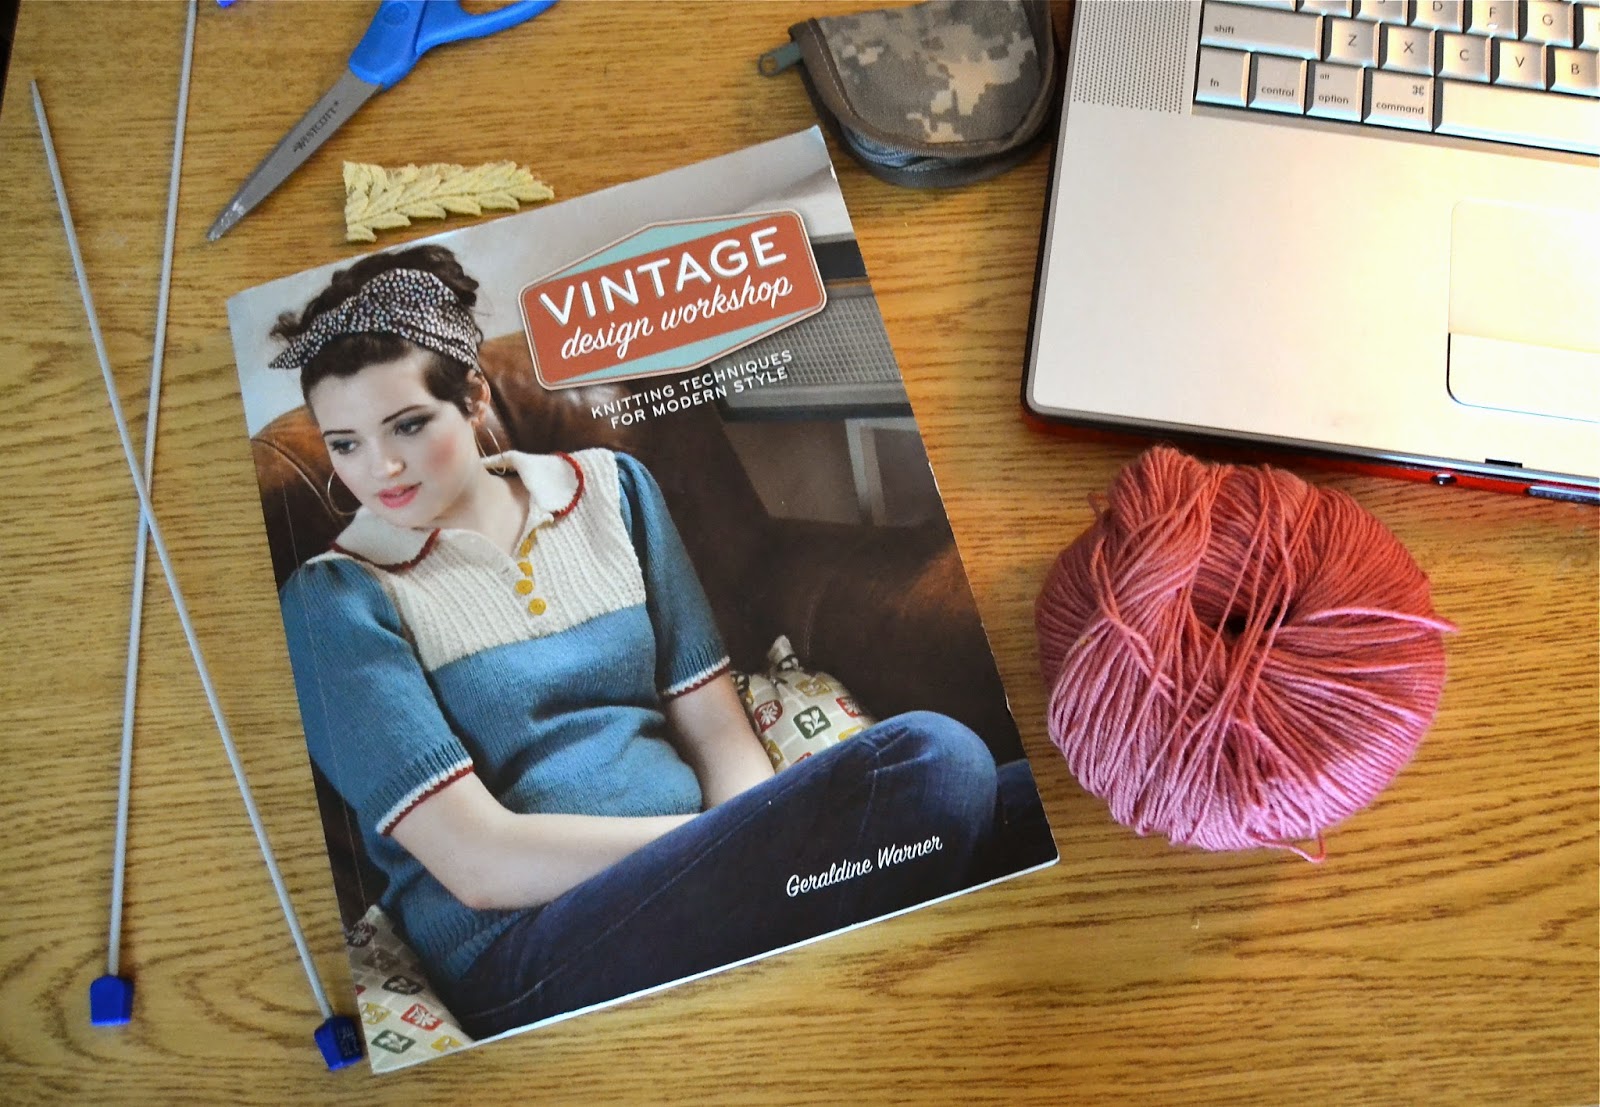 Flashback Summer: "Vintage Design Workshop:  Knitting Techniques for Modern Style" by Geraldine Warner book review